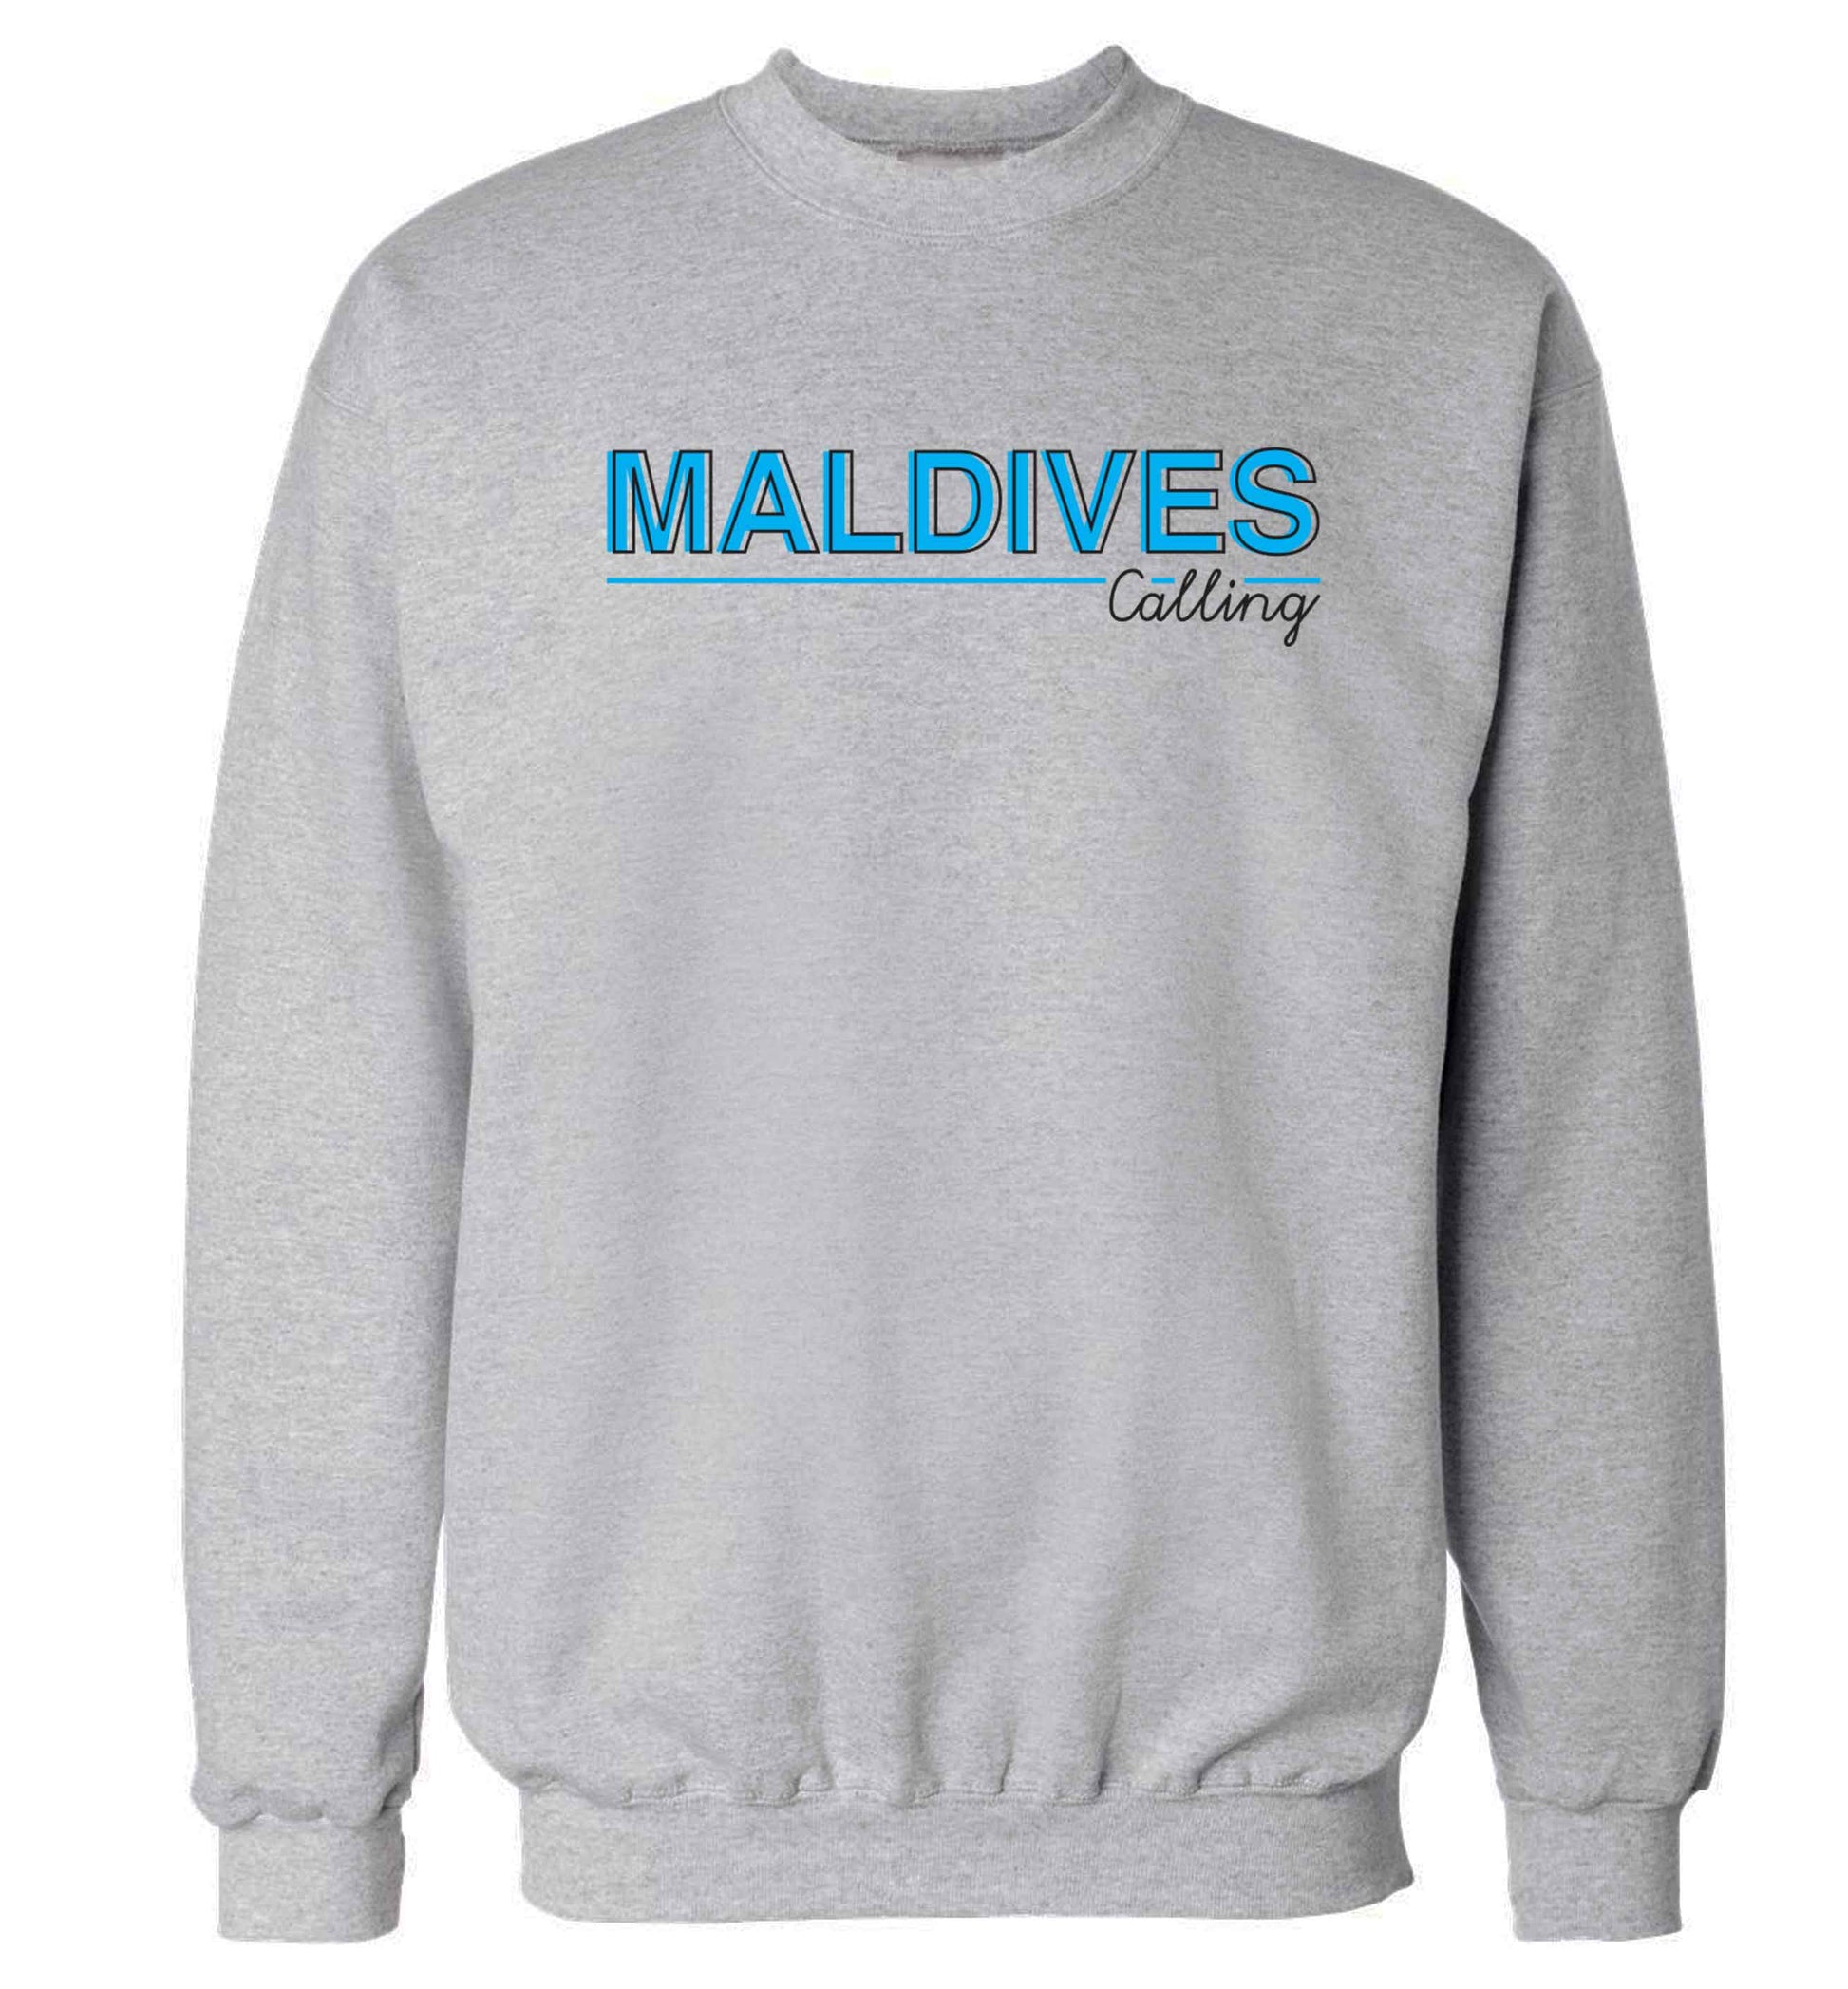 Maldives calling Adult's unisex grey Sweater 2XL